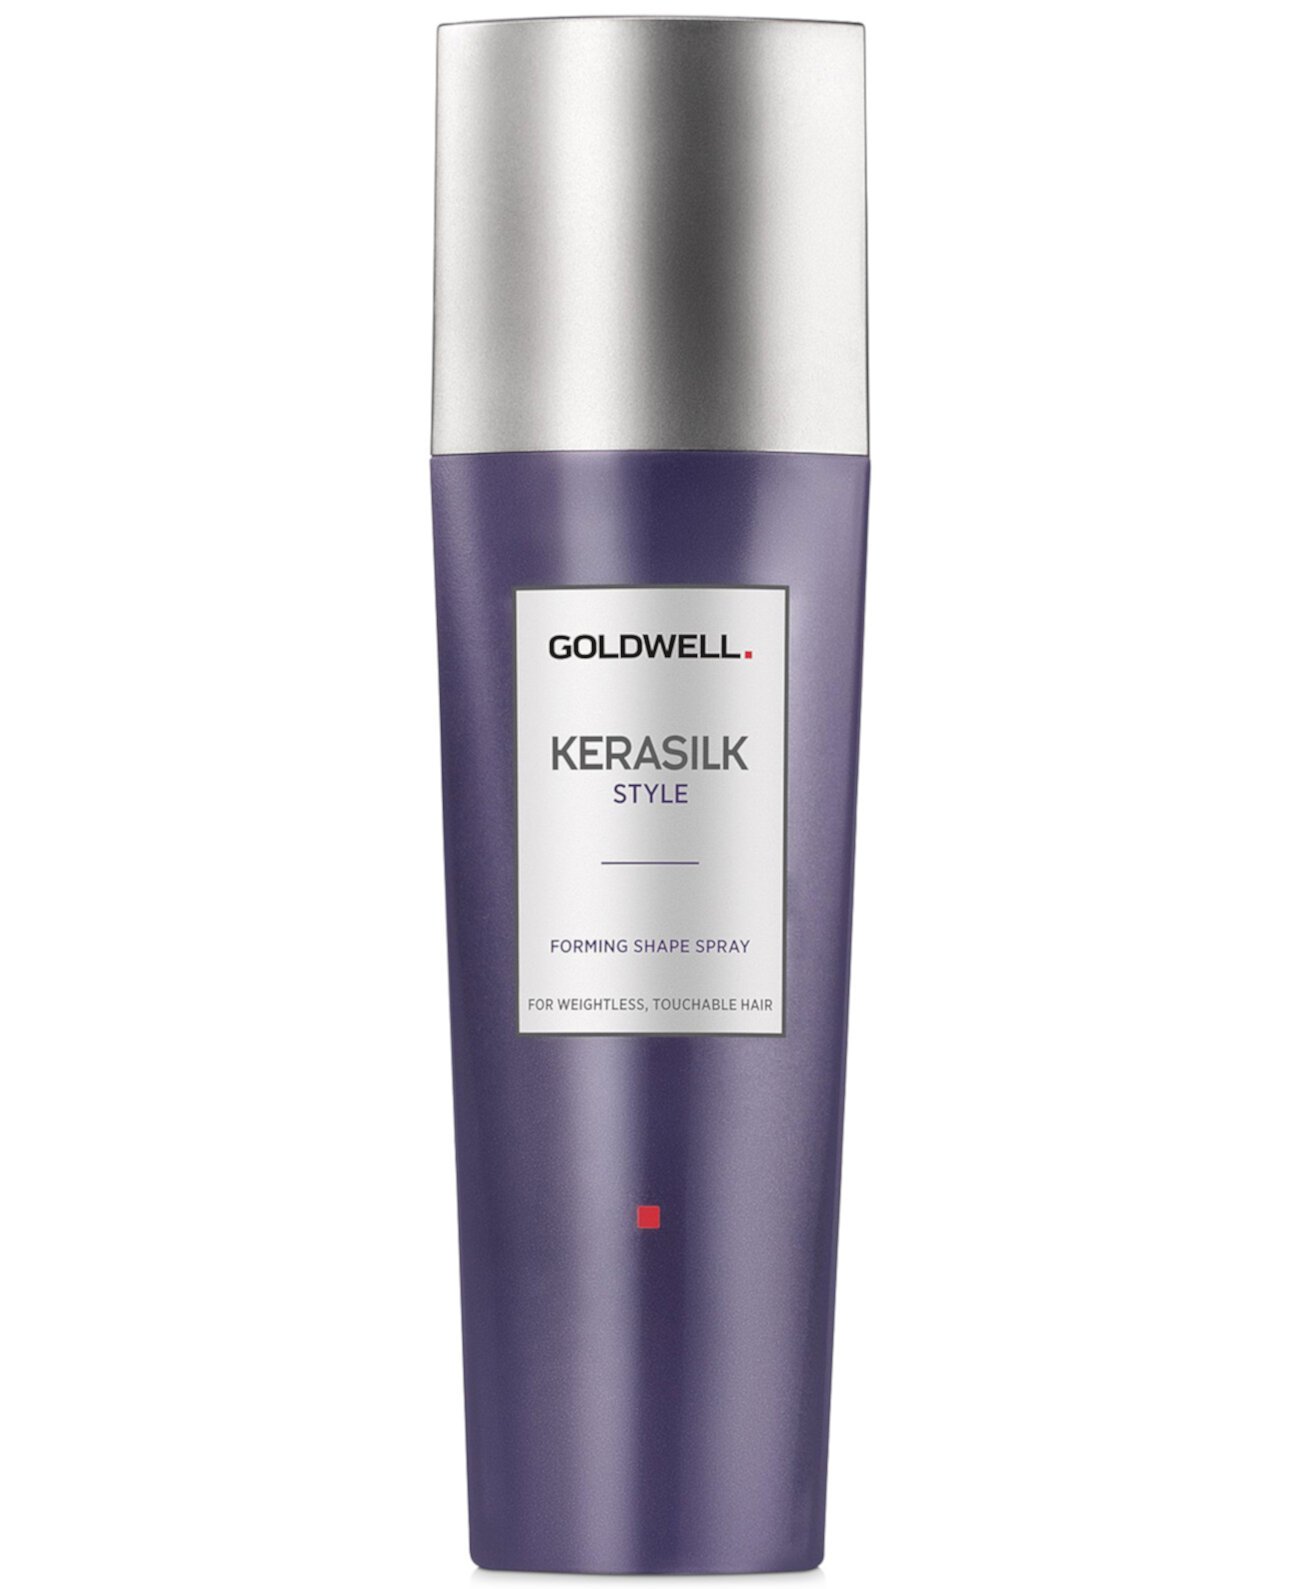 Kerasilk Style Forming Shape Spray, 4,2 унции, от PUREBEAUTY Salon & Spa Goldwell